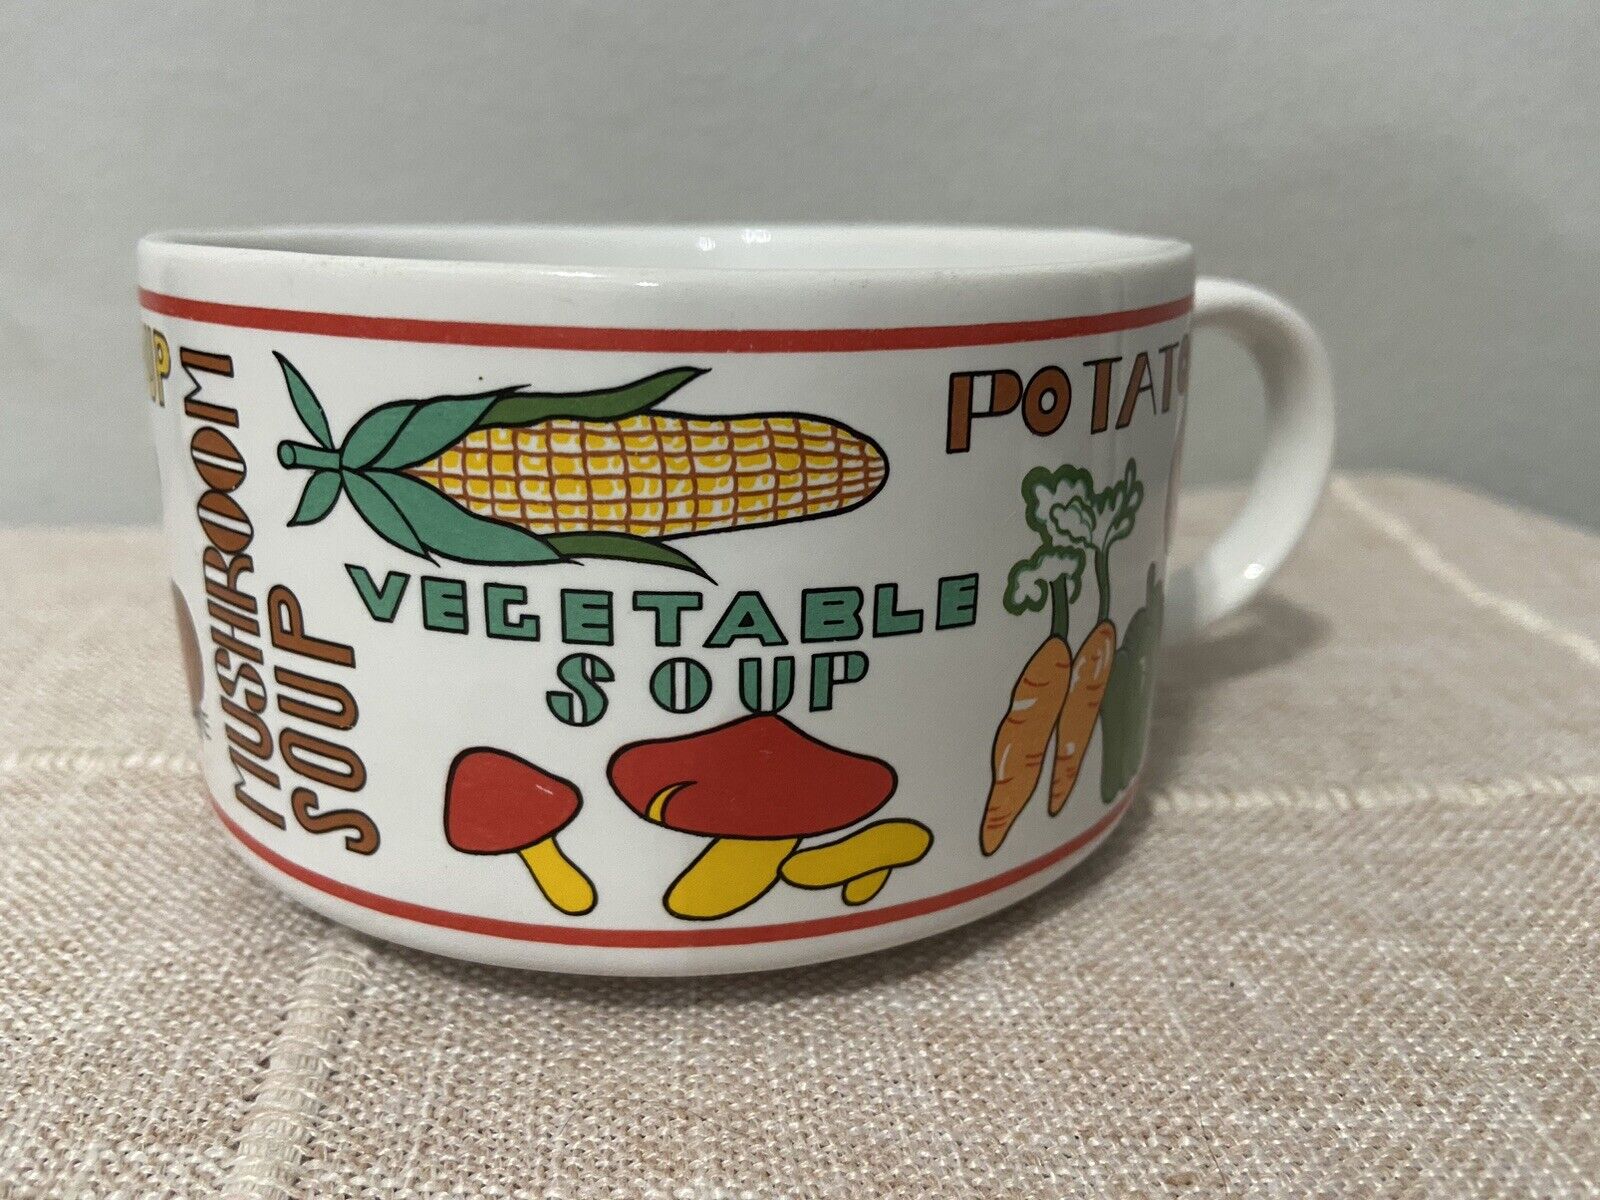 Vintage Retro 1970s Pop Art Soup Bowl/Mug With Vegetables Mushrooms